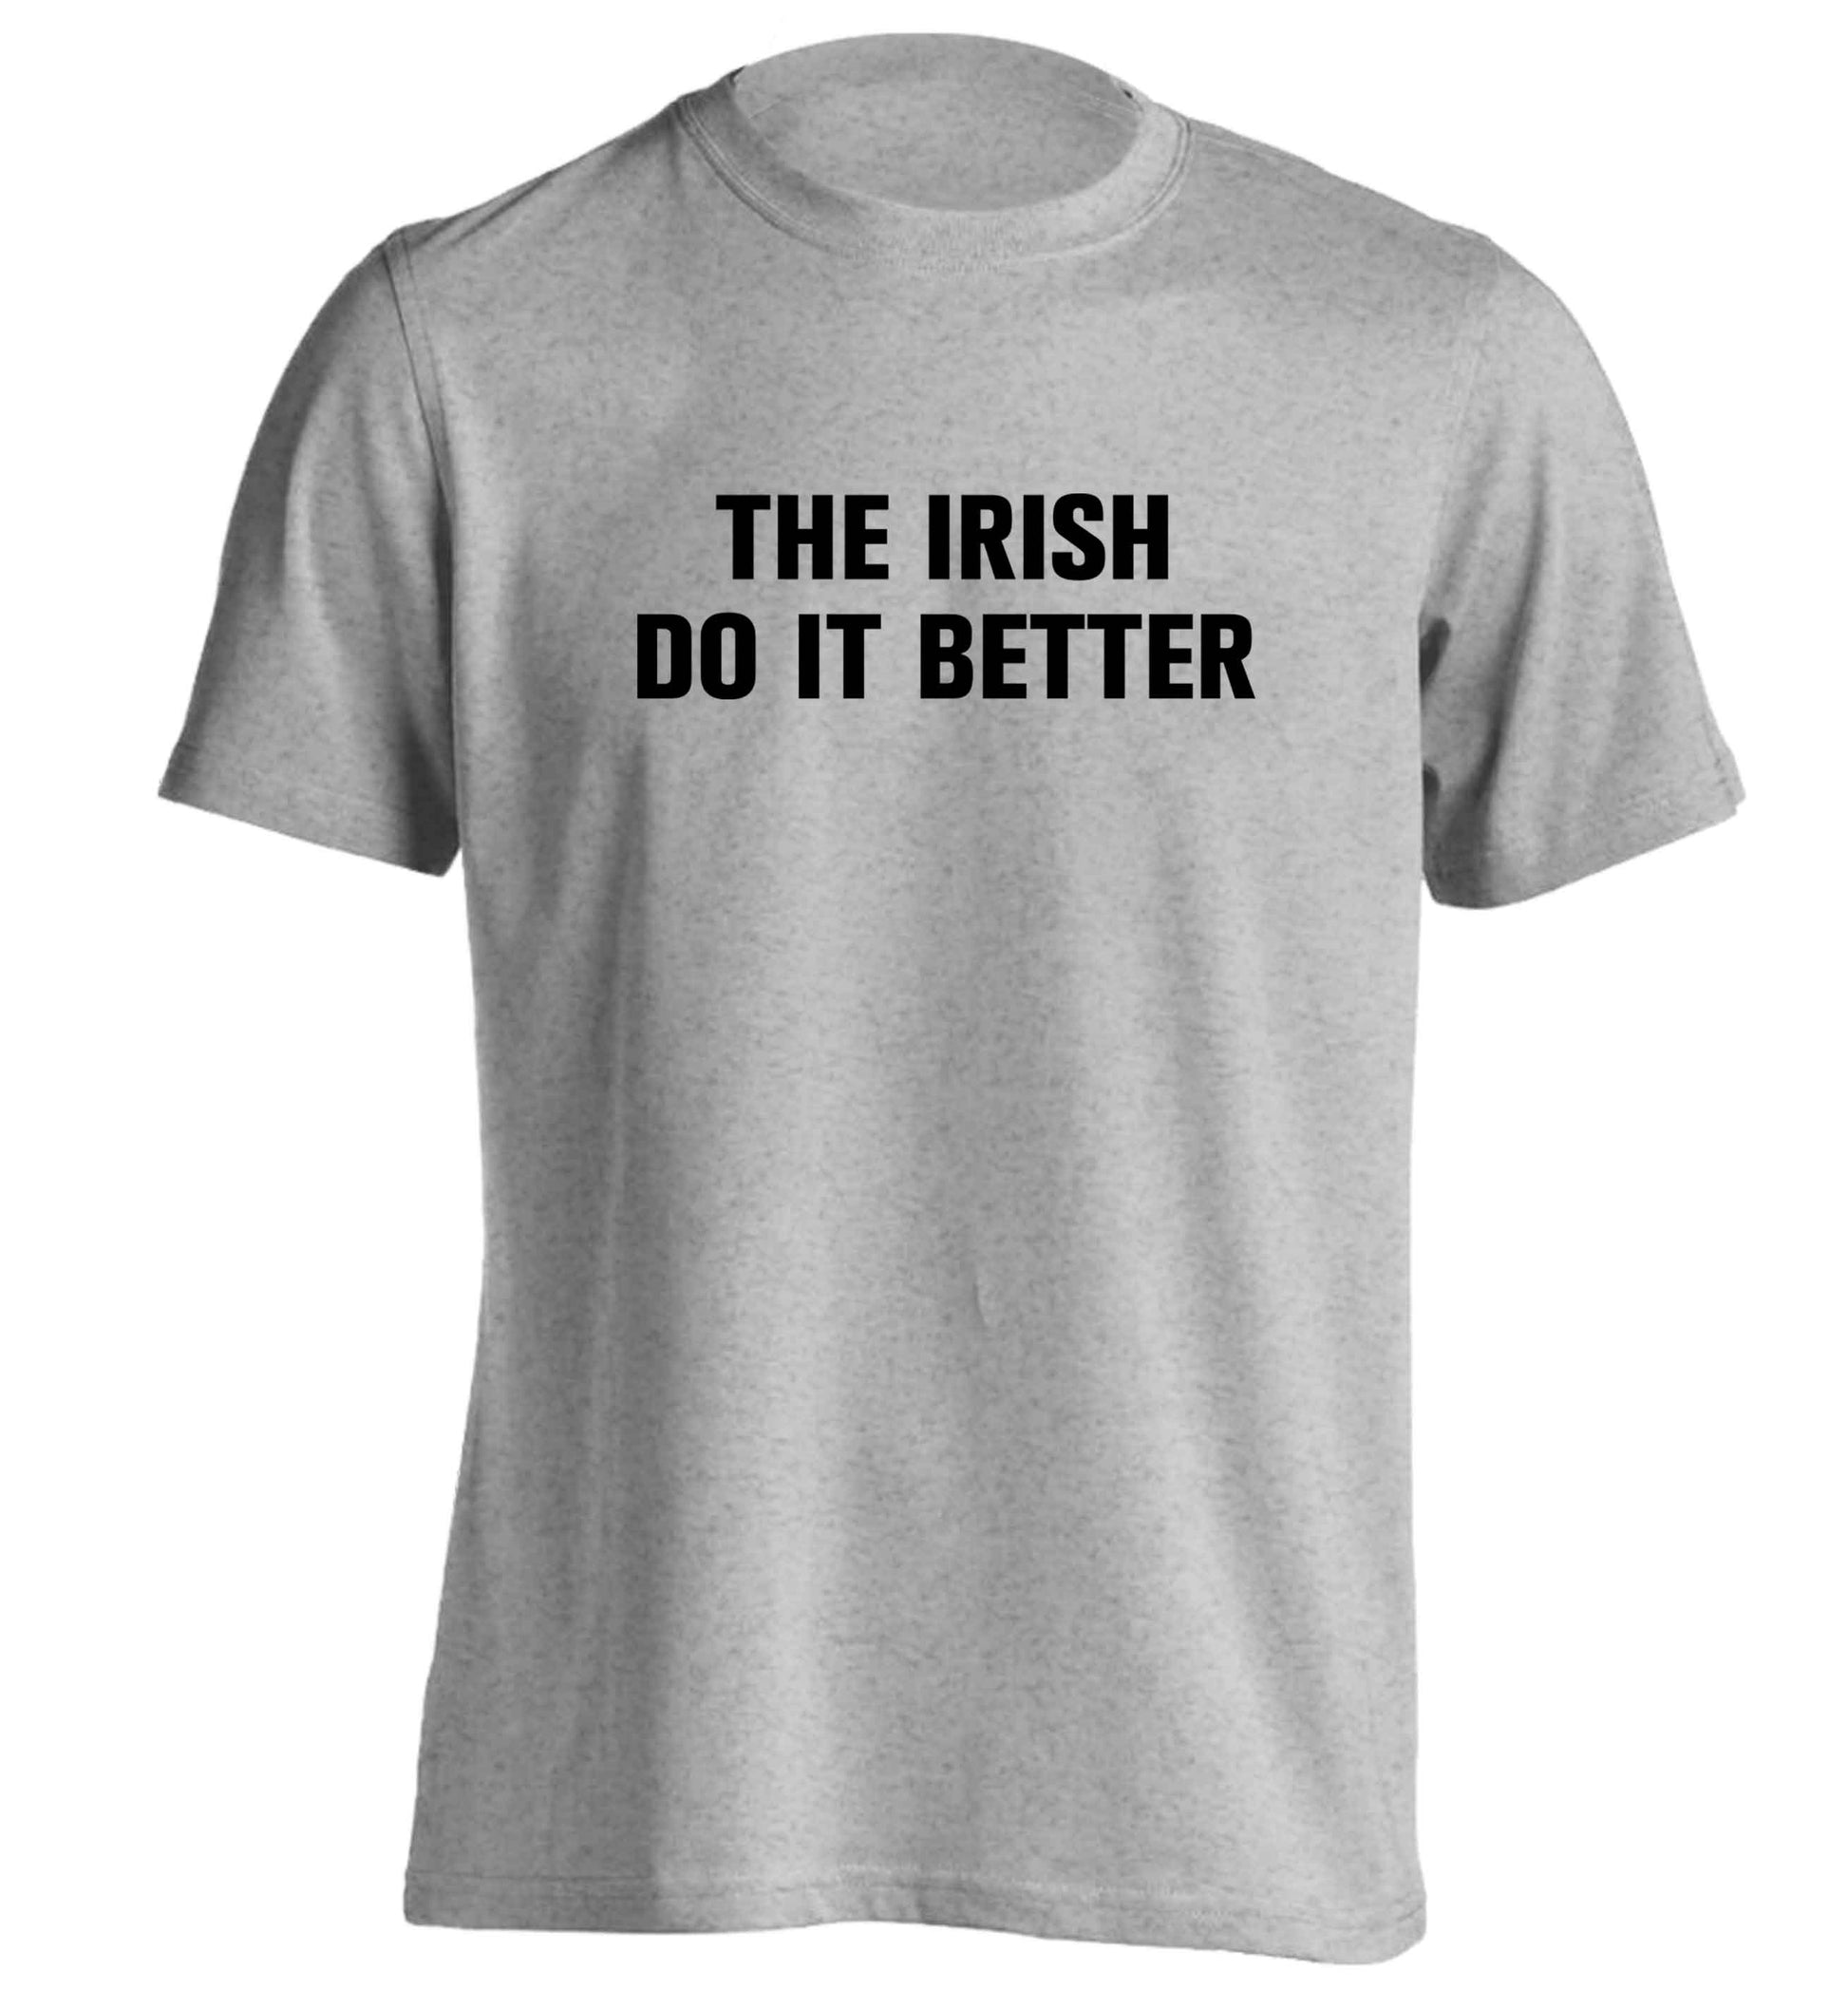 The Irish do it better adults unisex grey Tshirt 2XL